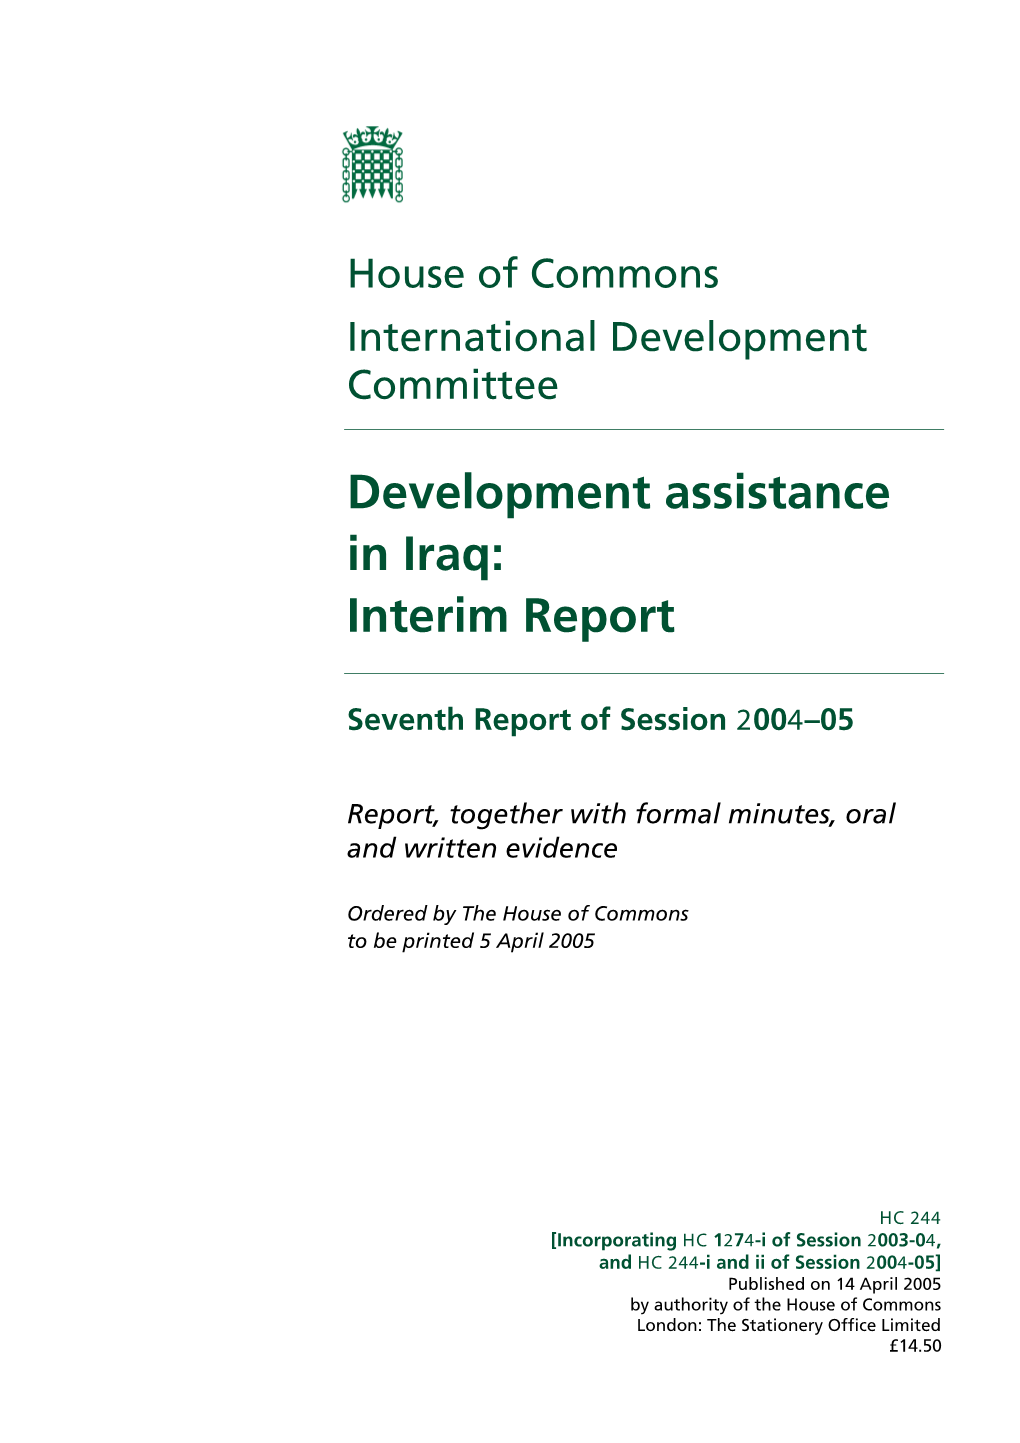 Development Assistance in Iraq: Interim Report